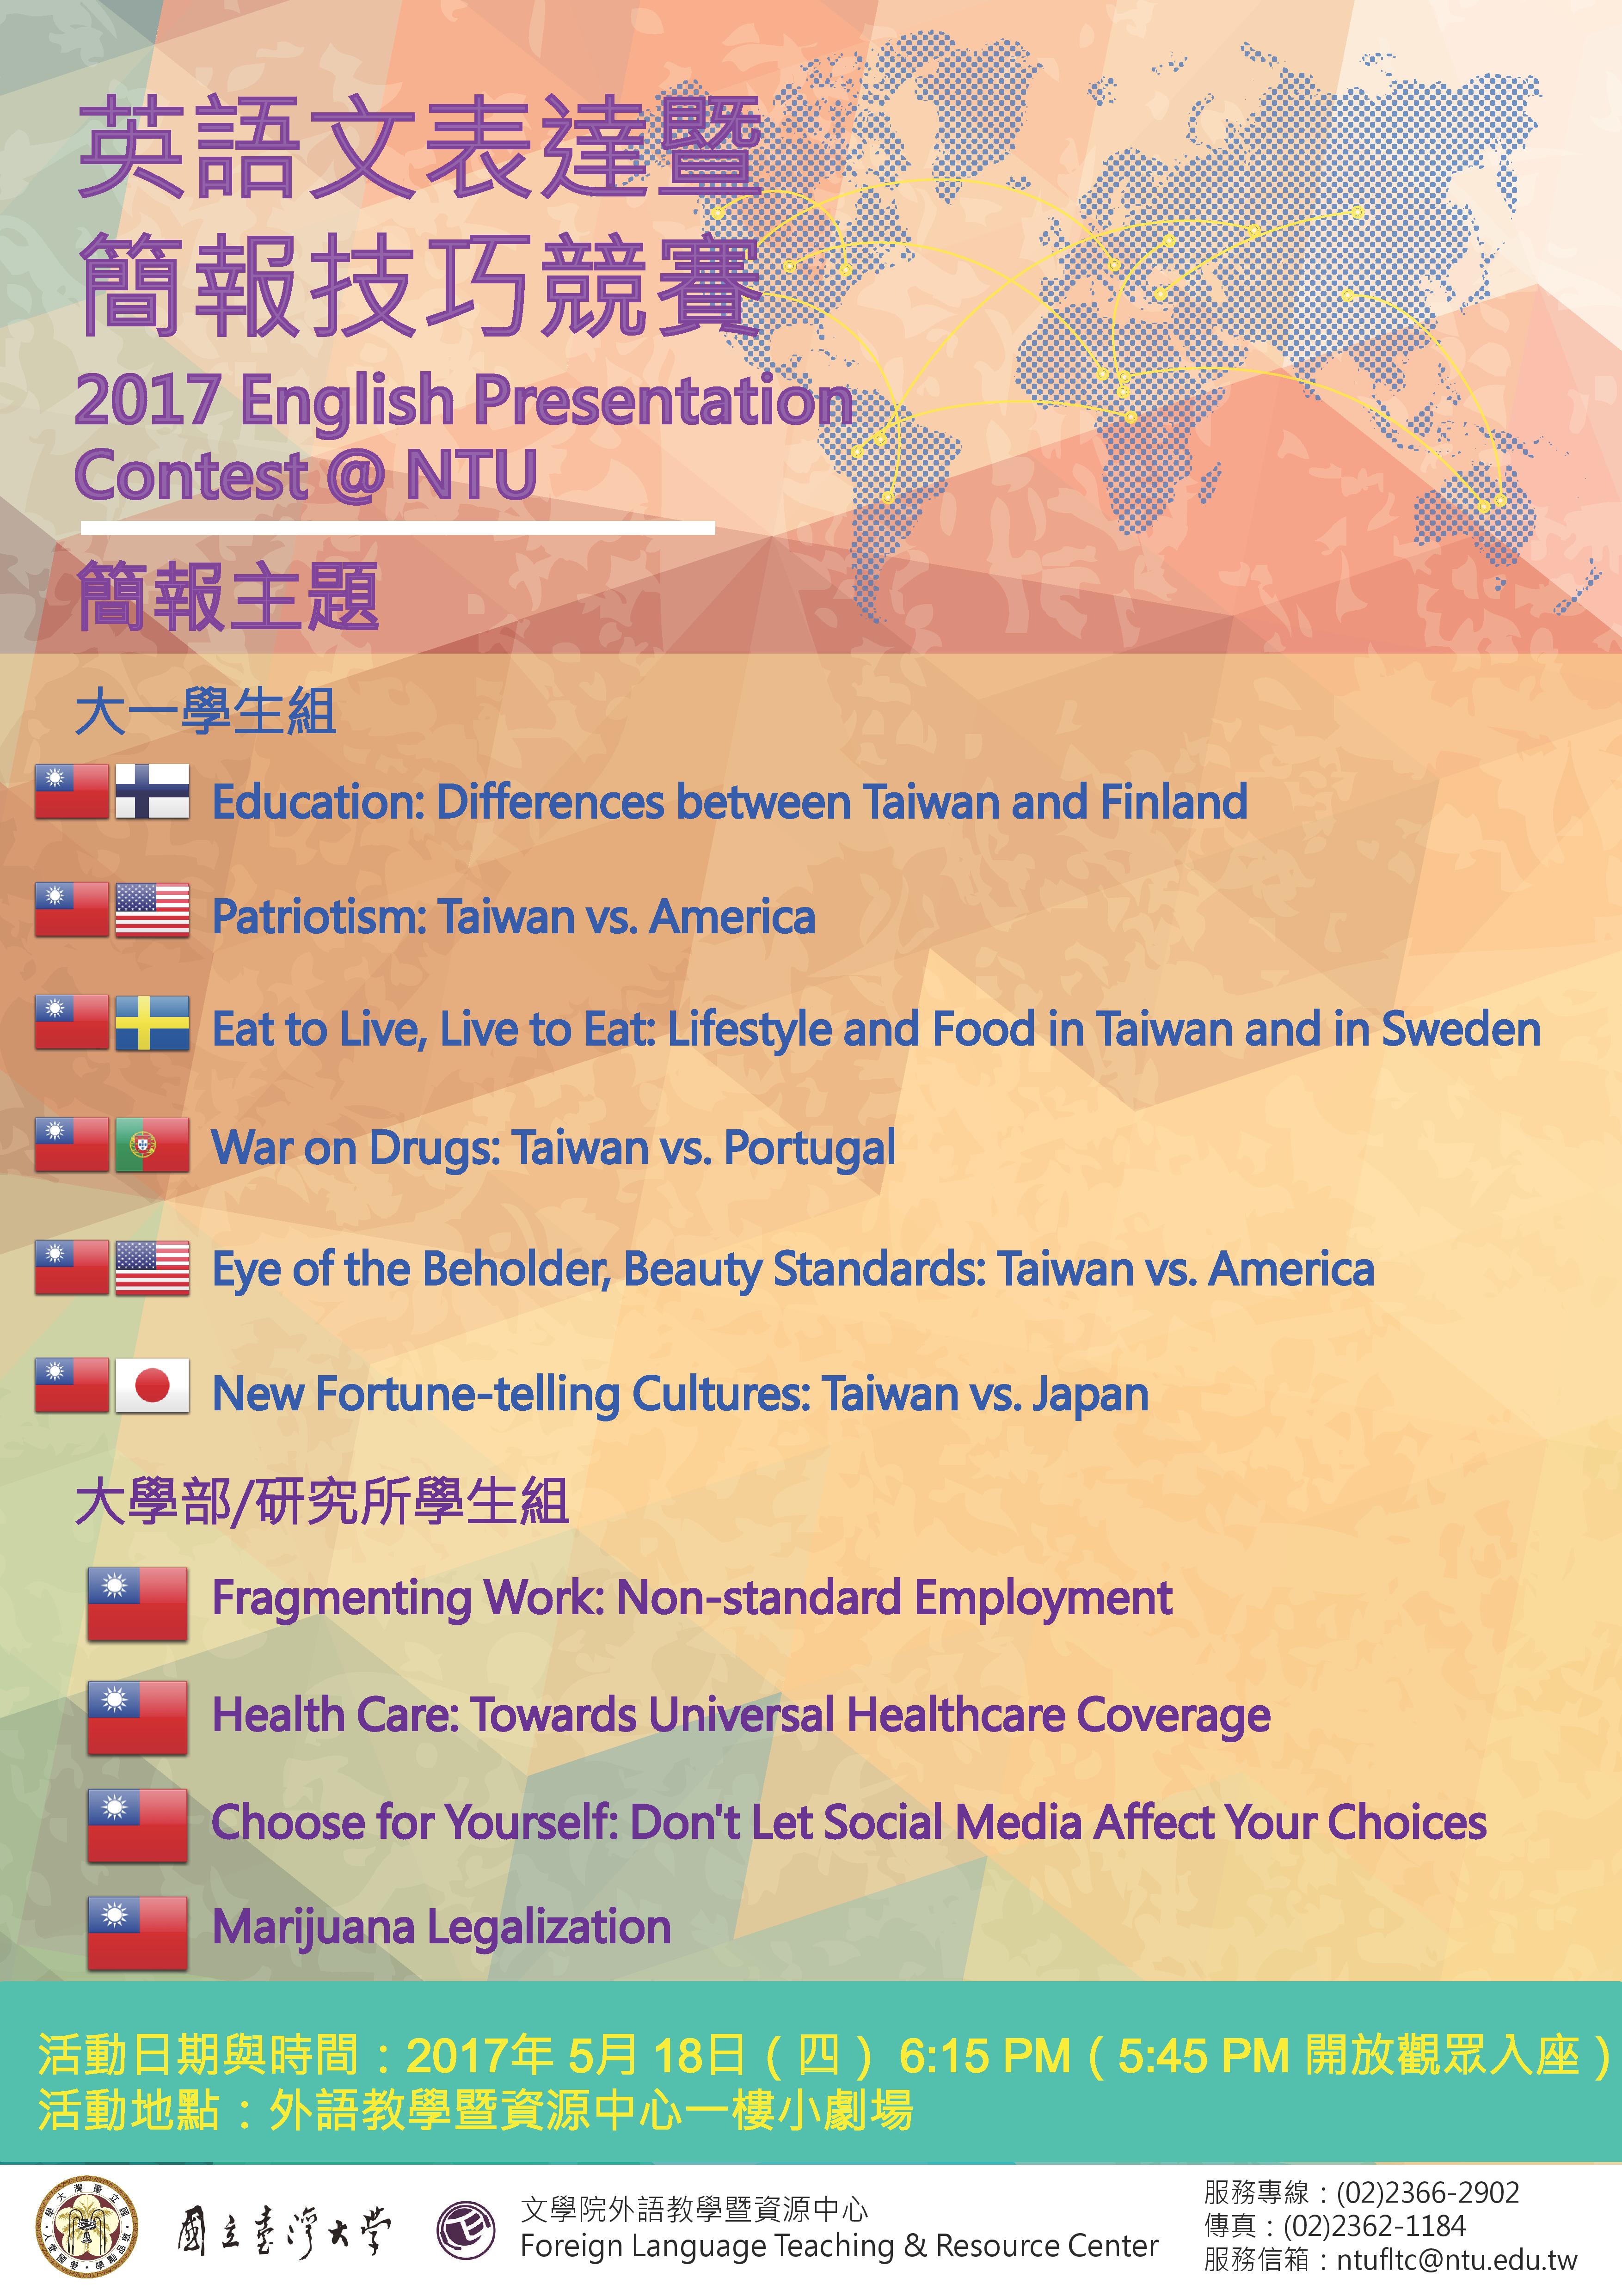 2017 English Presentation at NTU